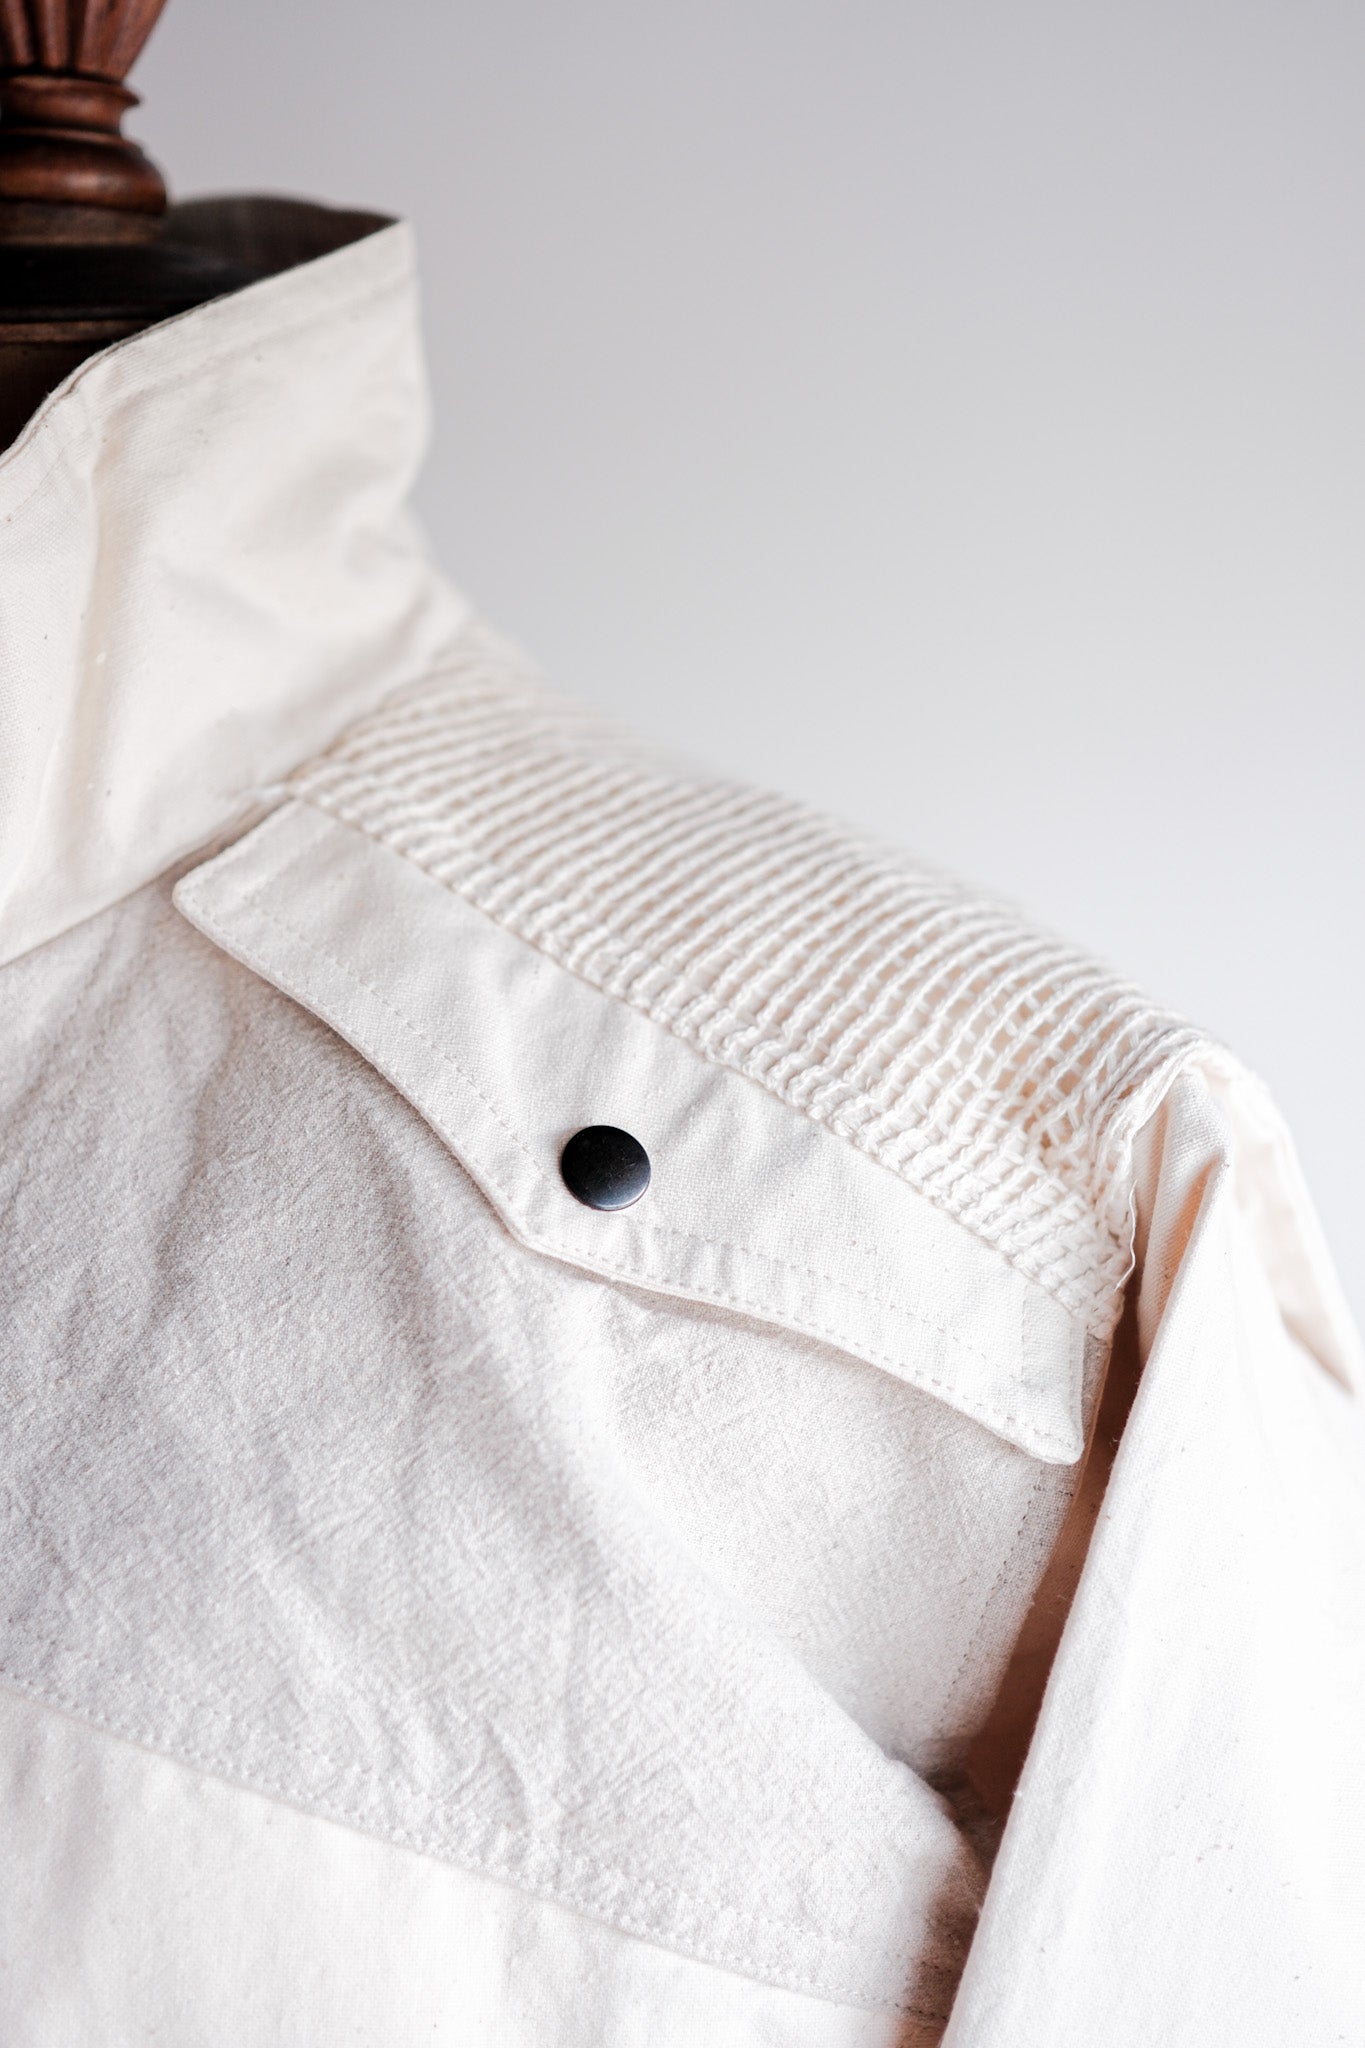 [~ 70's] French Vintage Multi Pocket Cotton Jacket